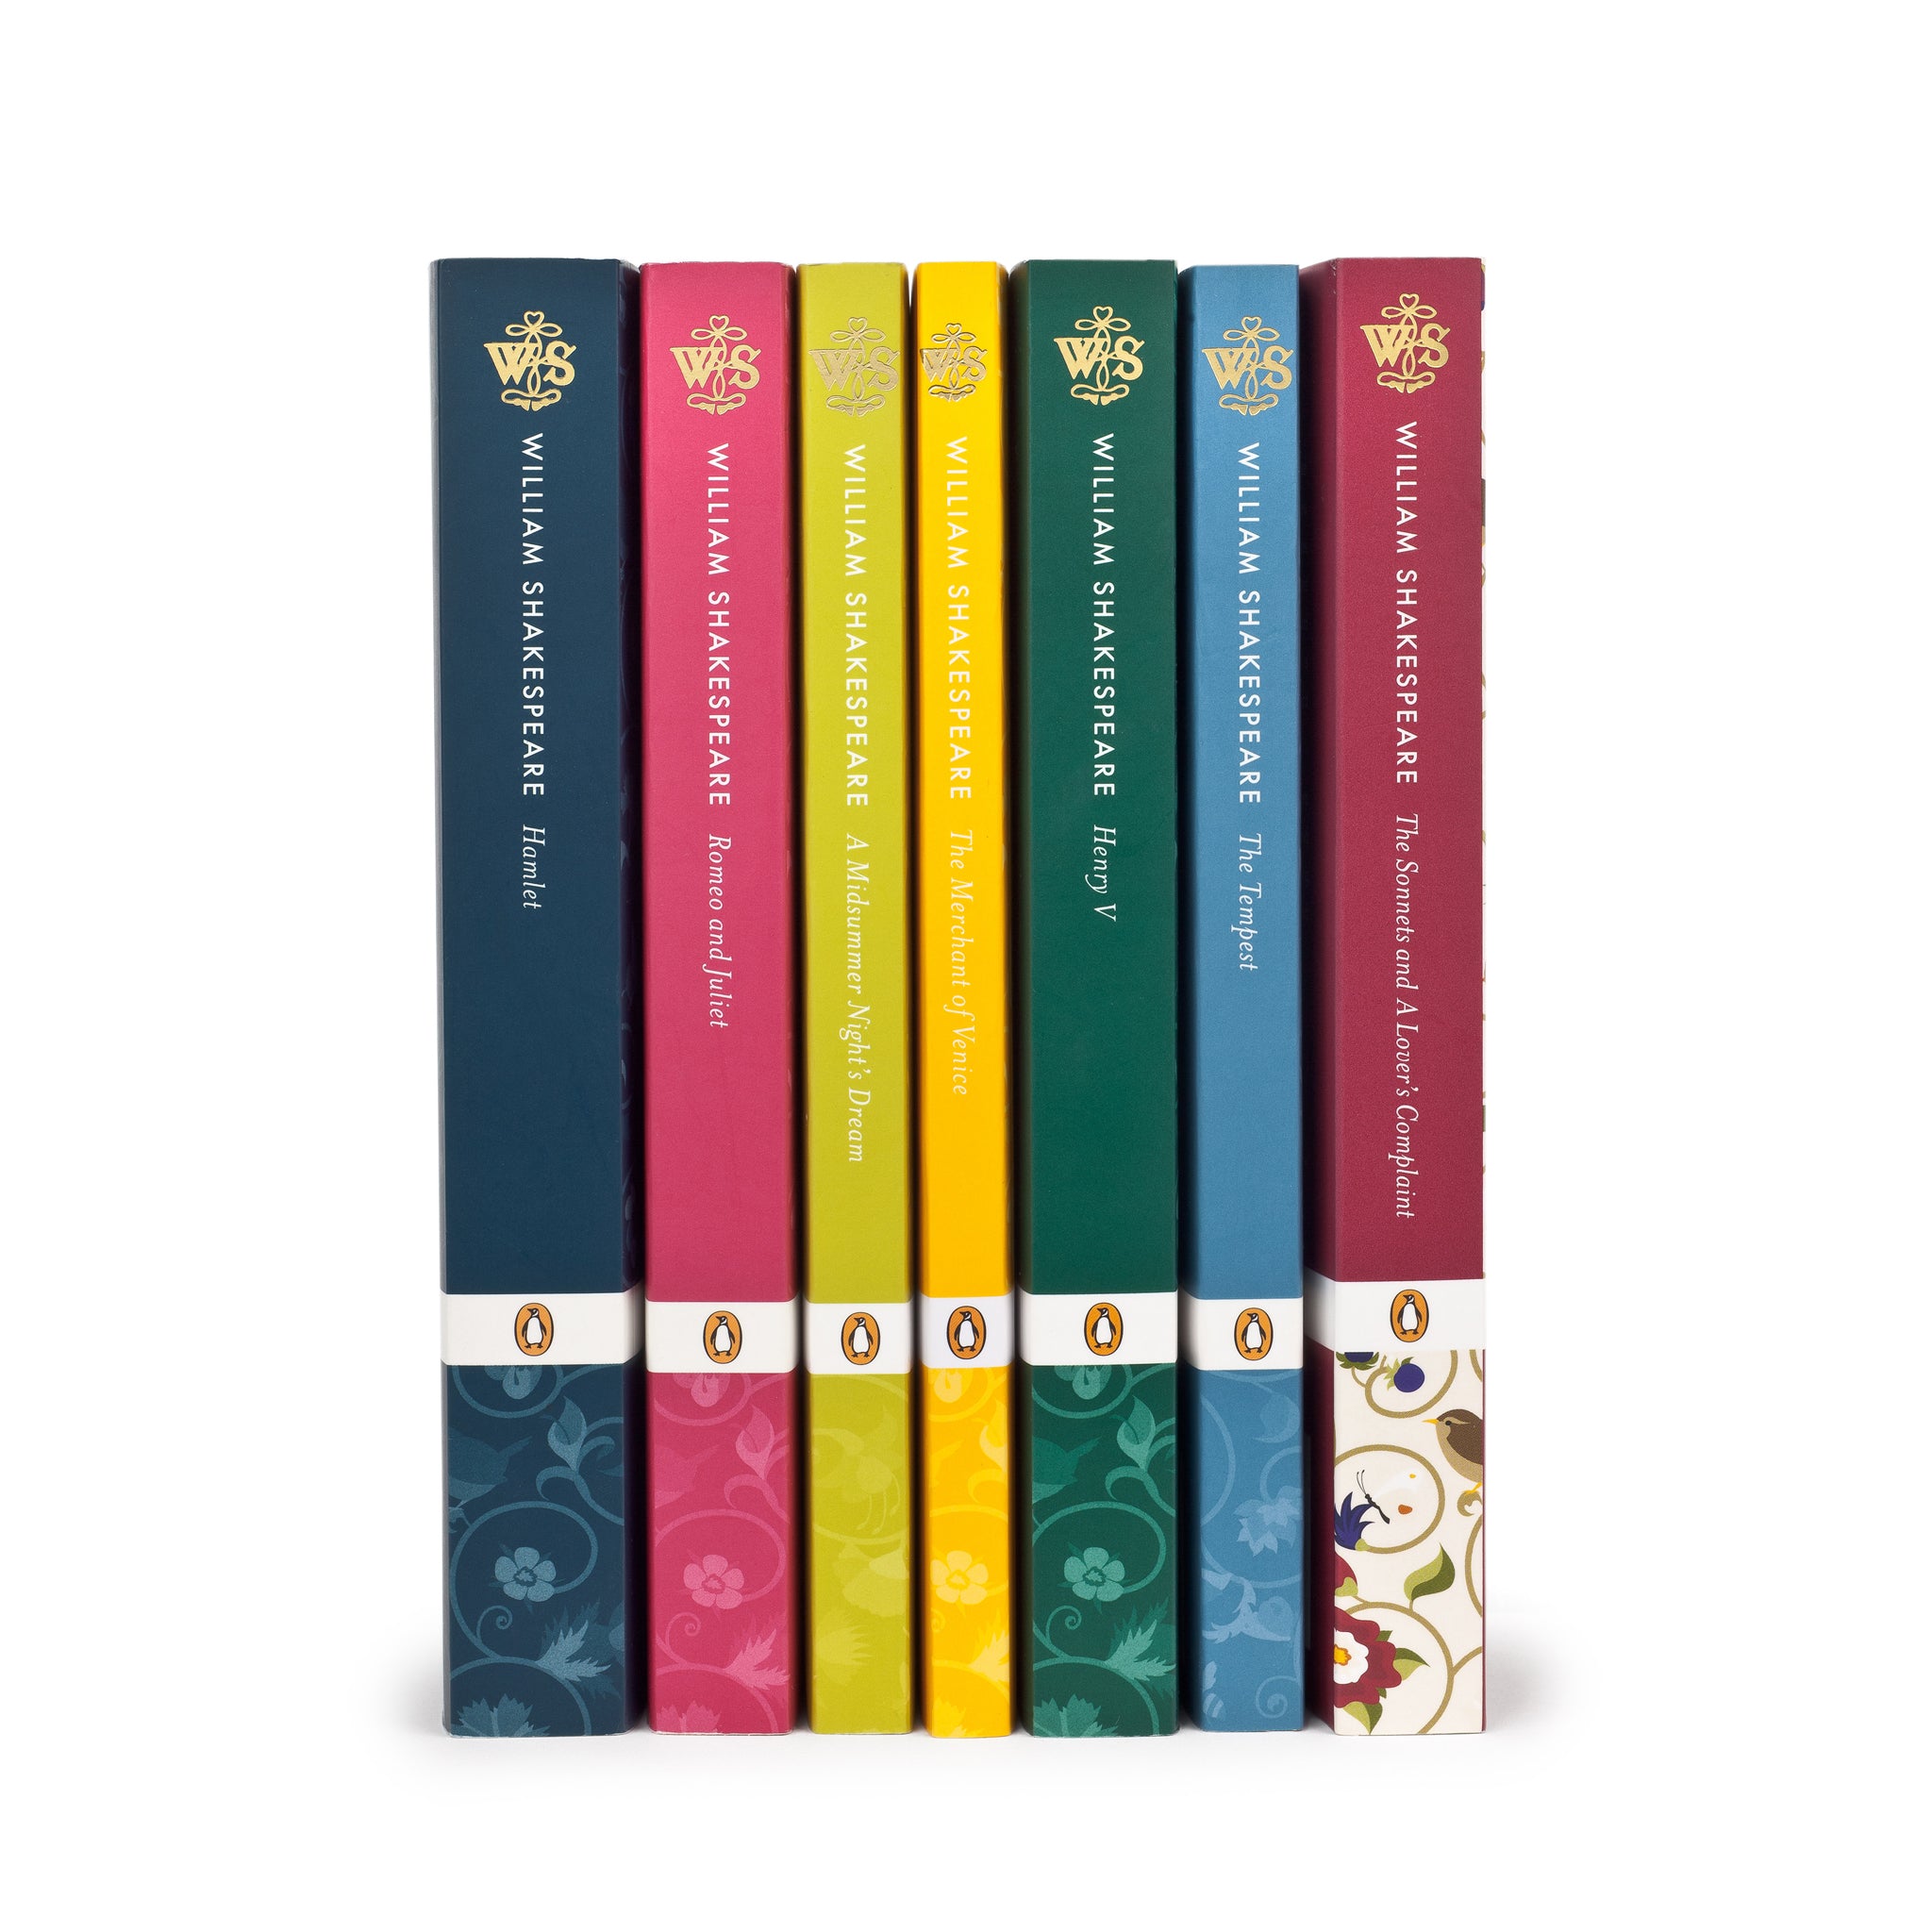 Penguin Classics Hamlet Shakespeare Inspired edition – Shakespeare Shop